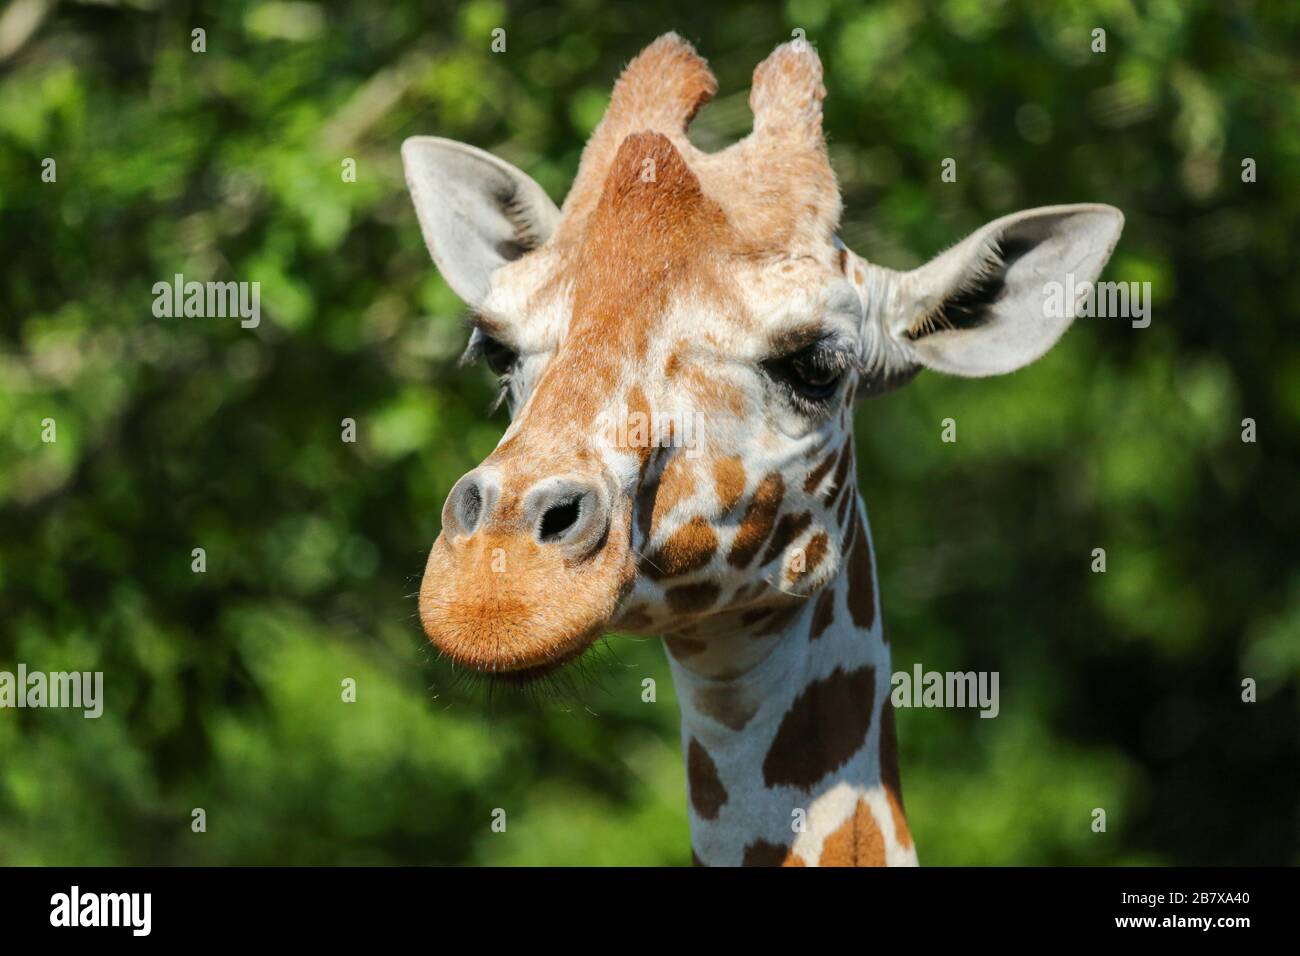 Giraffe Portrait at the Jacksonville Zoo Stock Photo